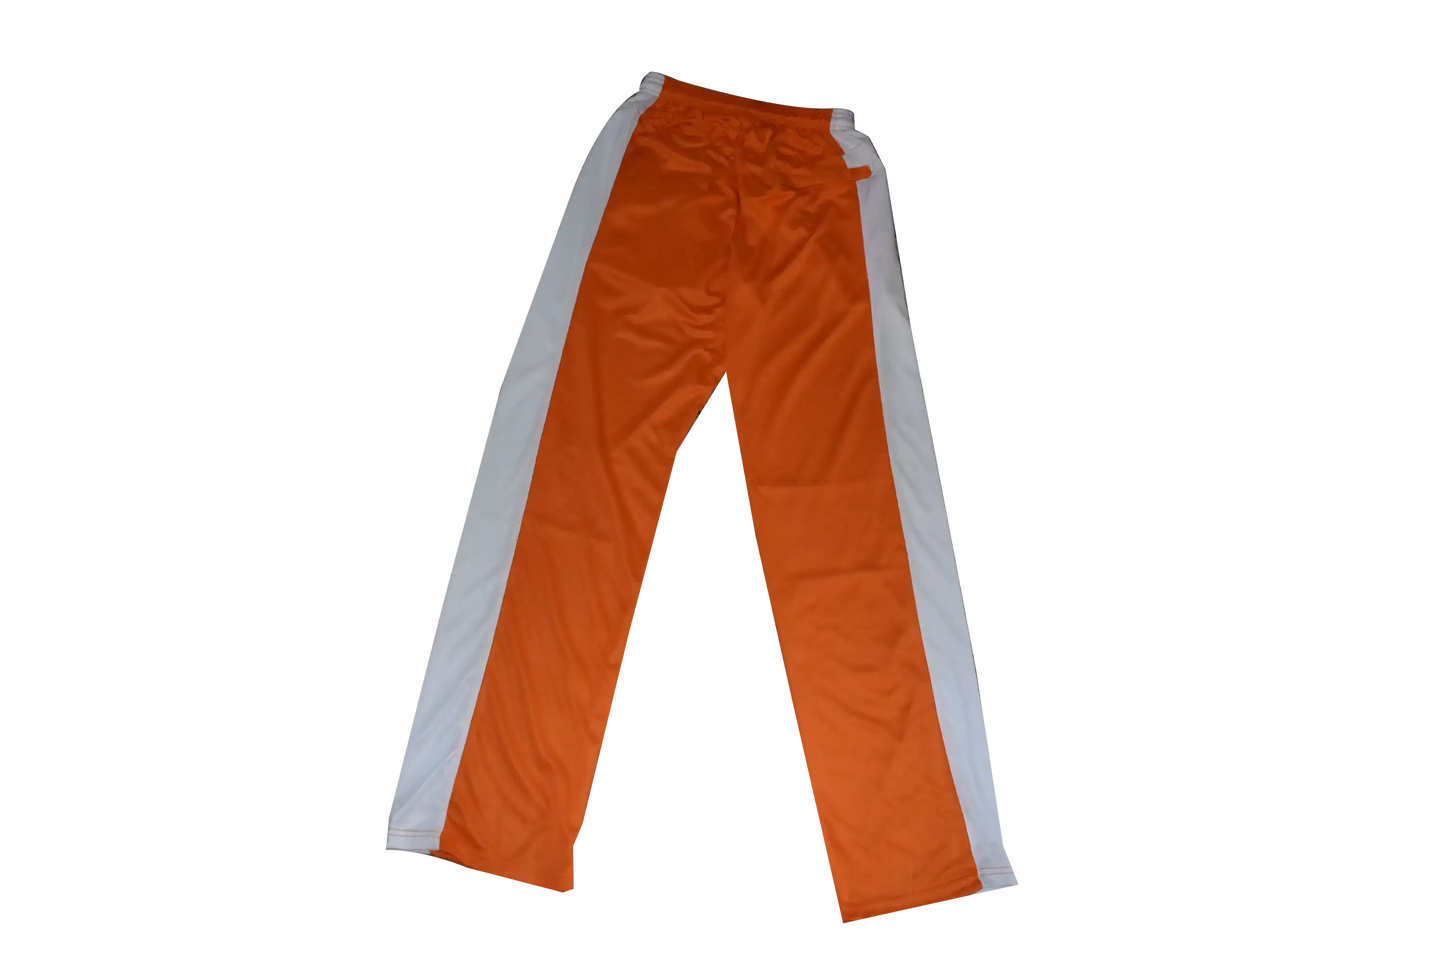 back of orange closed mesh pants whit side stripe